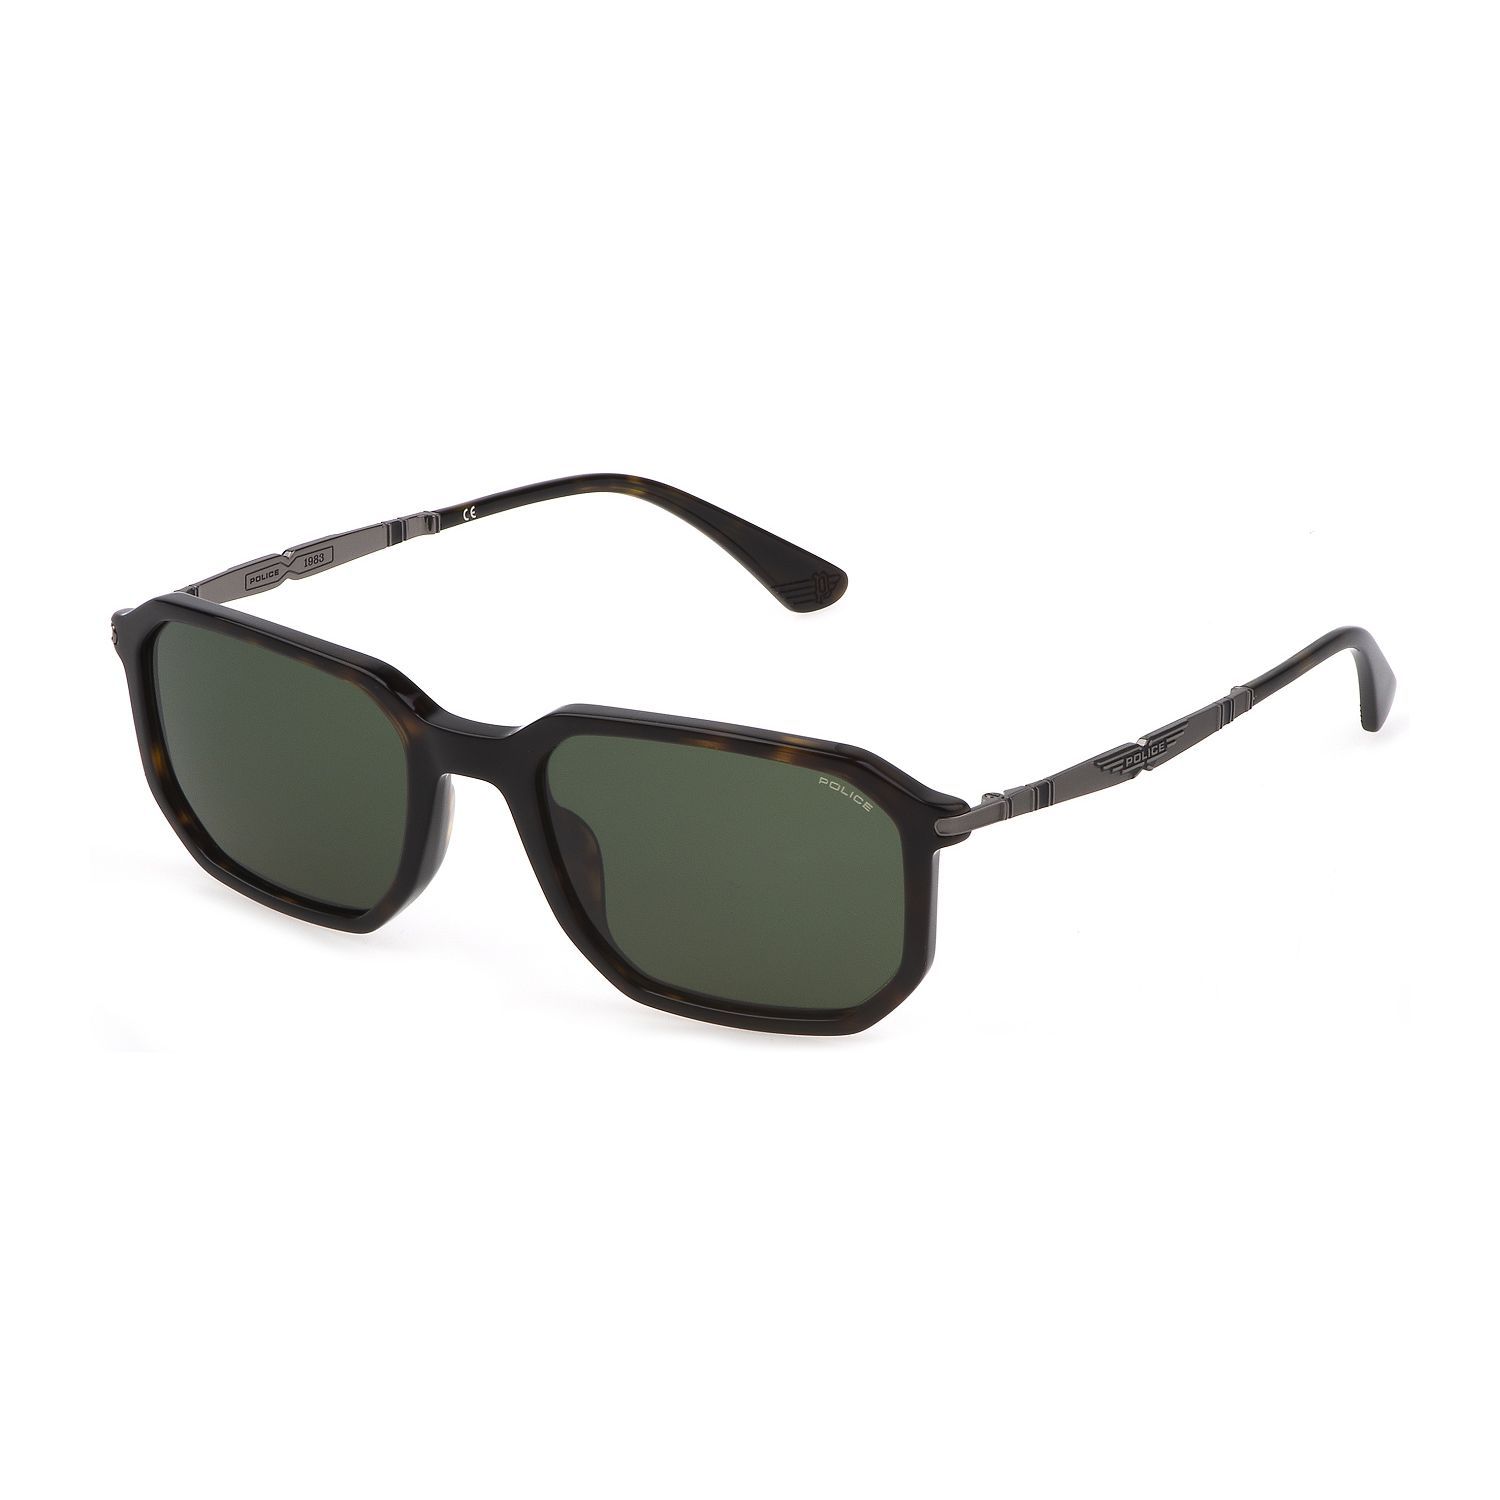 SPLF67M Rectangle Sunglasses 722 - size 55